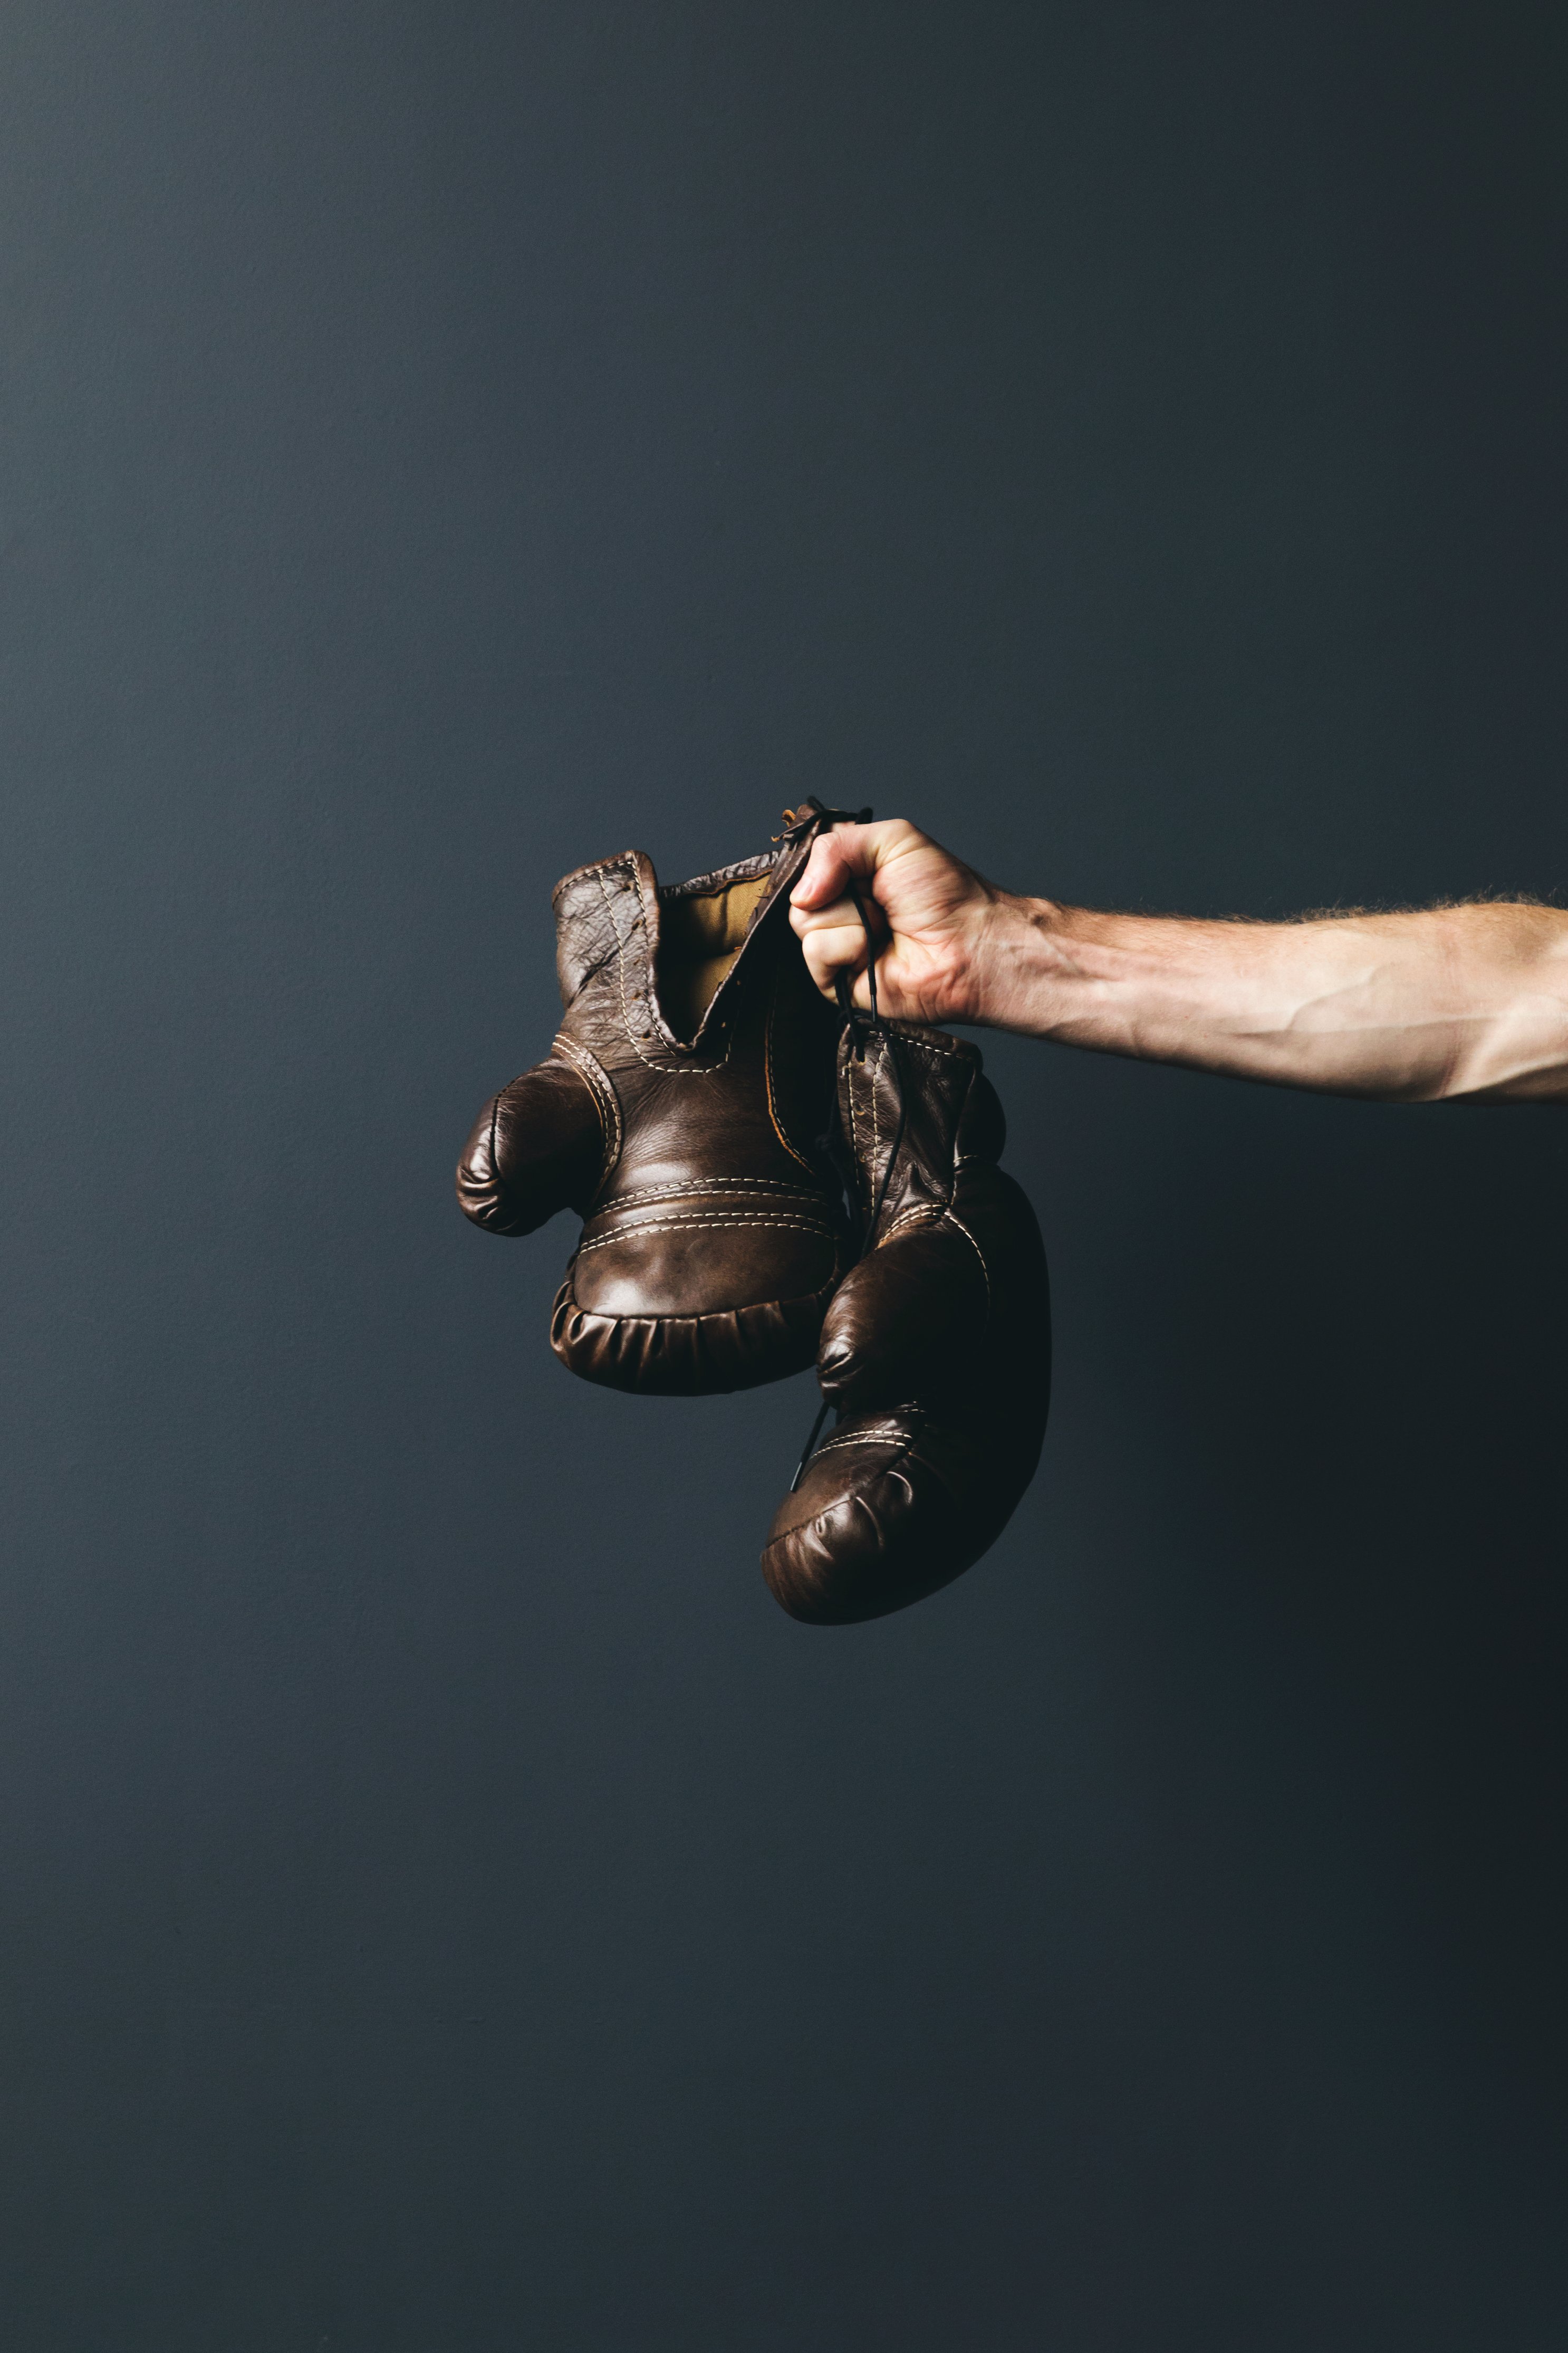 Vertical Antique Boxing GLoves by Sarah Pflug